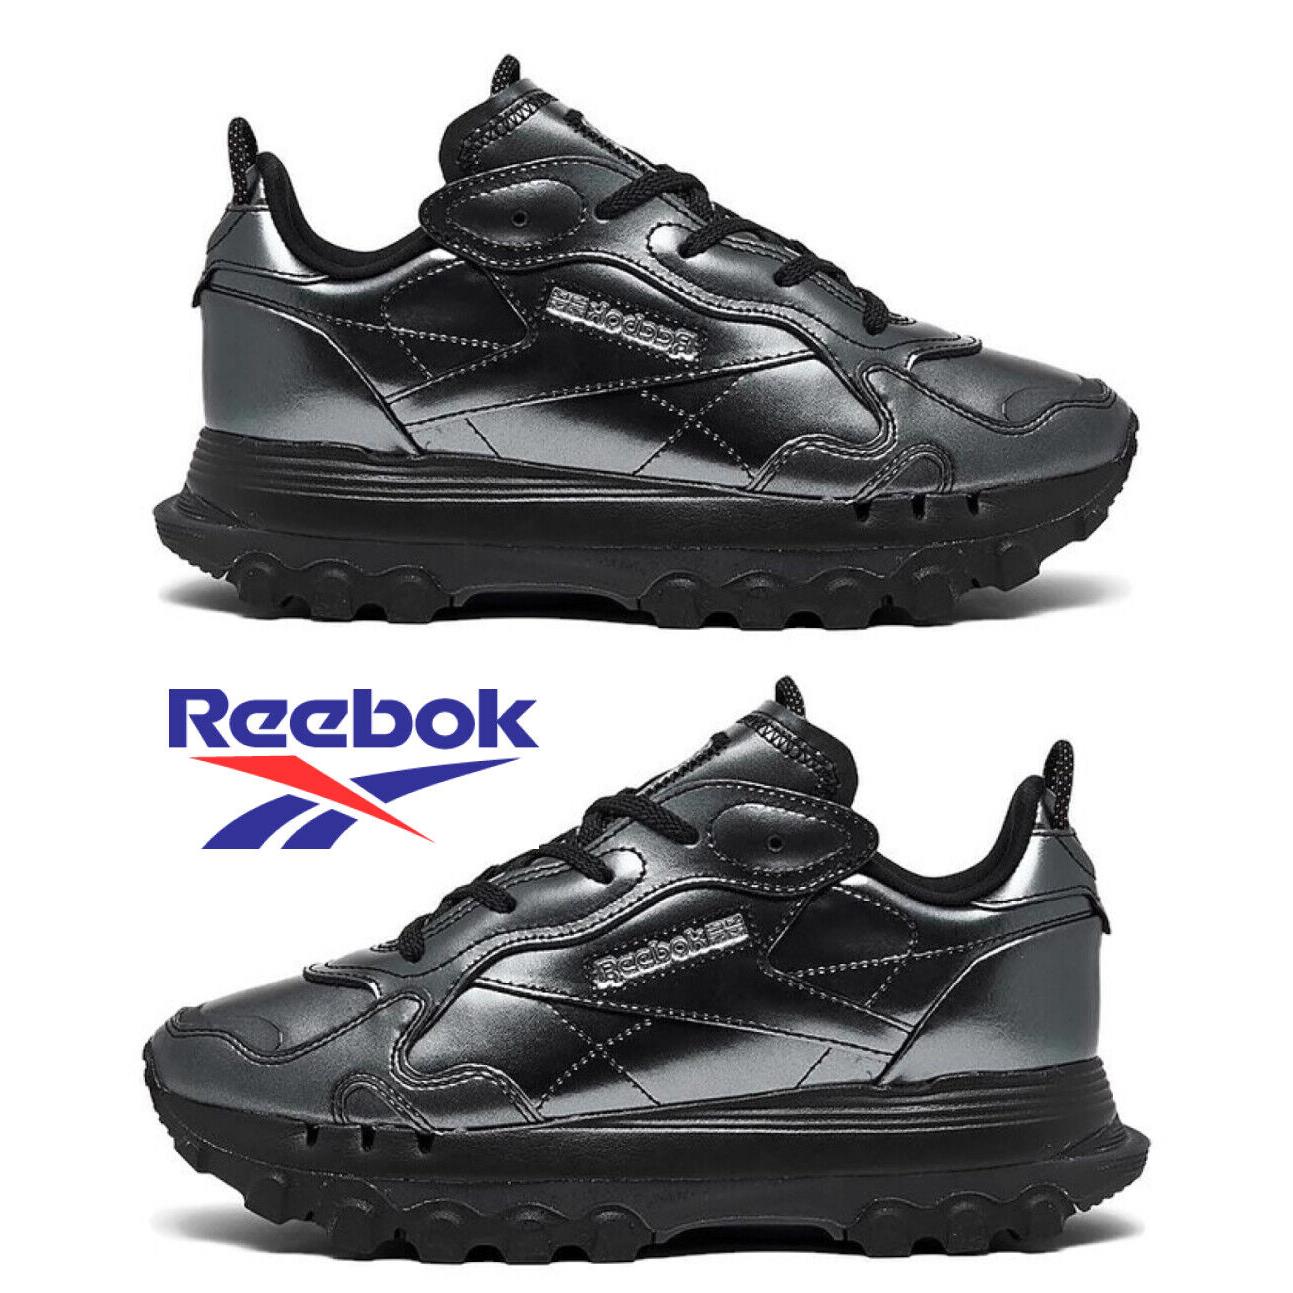 Cardi B X Reebok Classic Leather Women`s Casual Shoes Sport Sneakers Black - Black , Core Black/Core Black/Dark Silver Manufacturer